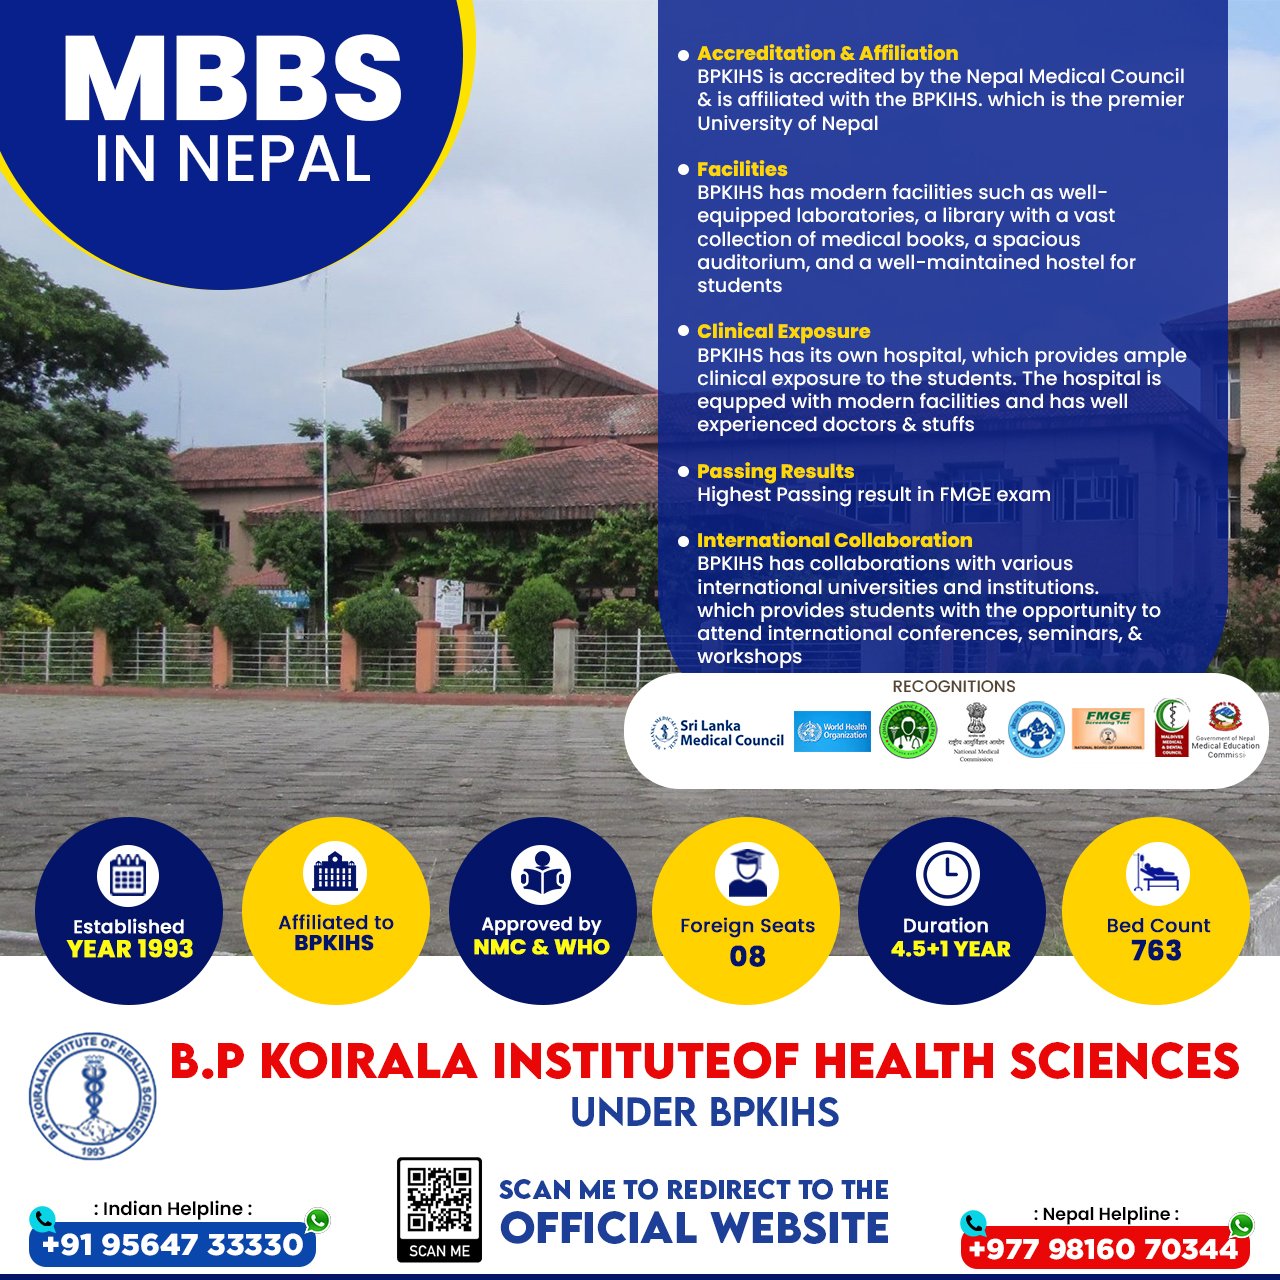 mbbs-in-nepal-at-bp-koirala-institute-of-health-sciences-under-bpkihs